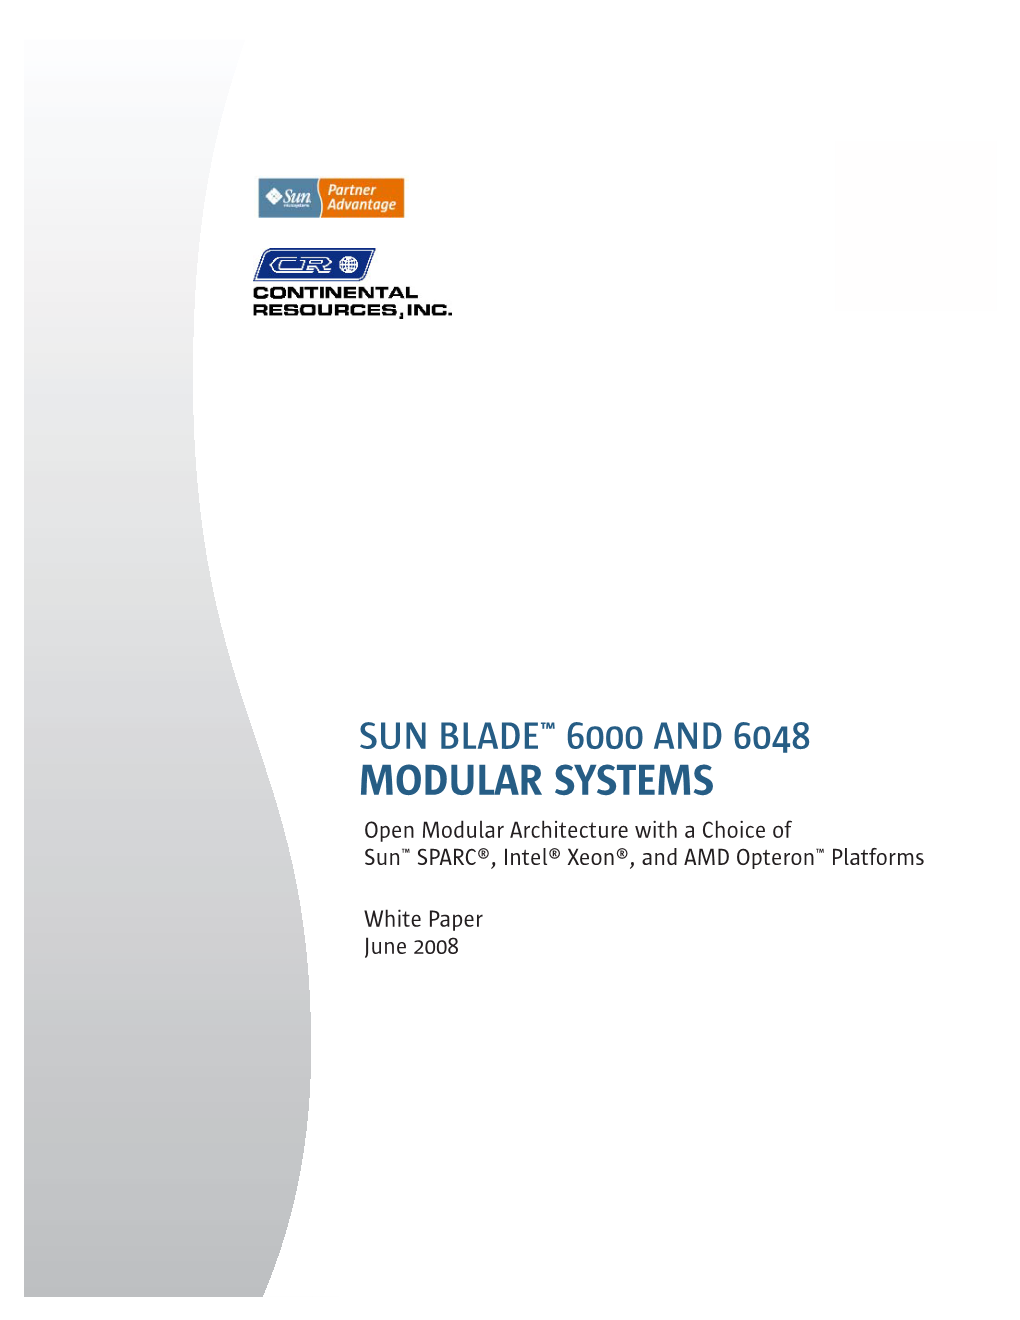 Sun Blade 6000 and 6048 Modular Systems